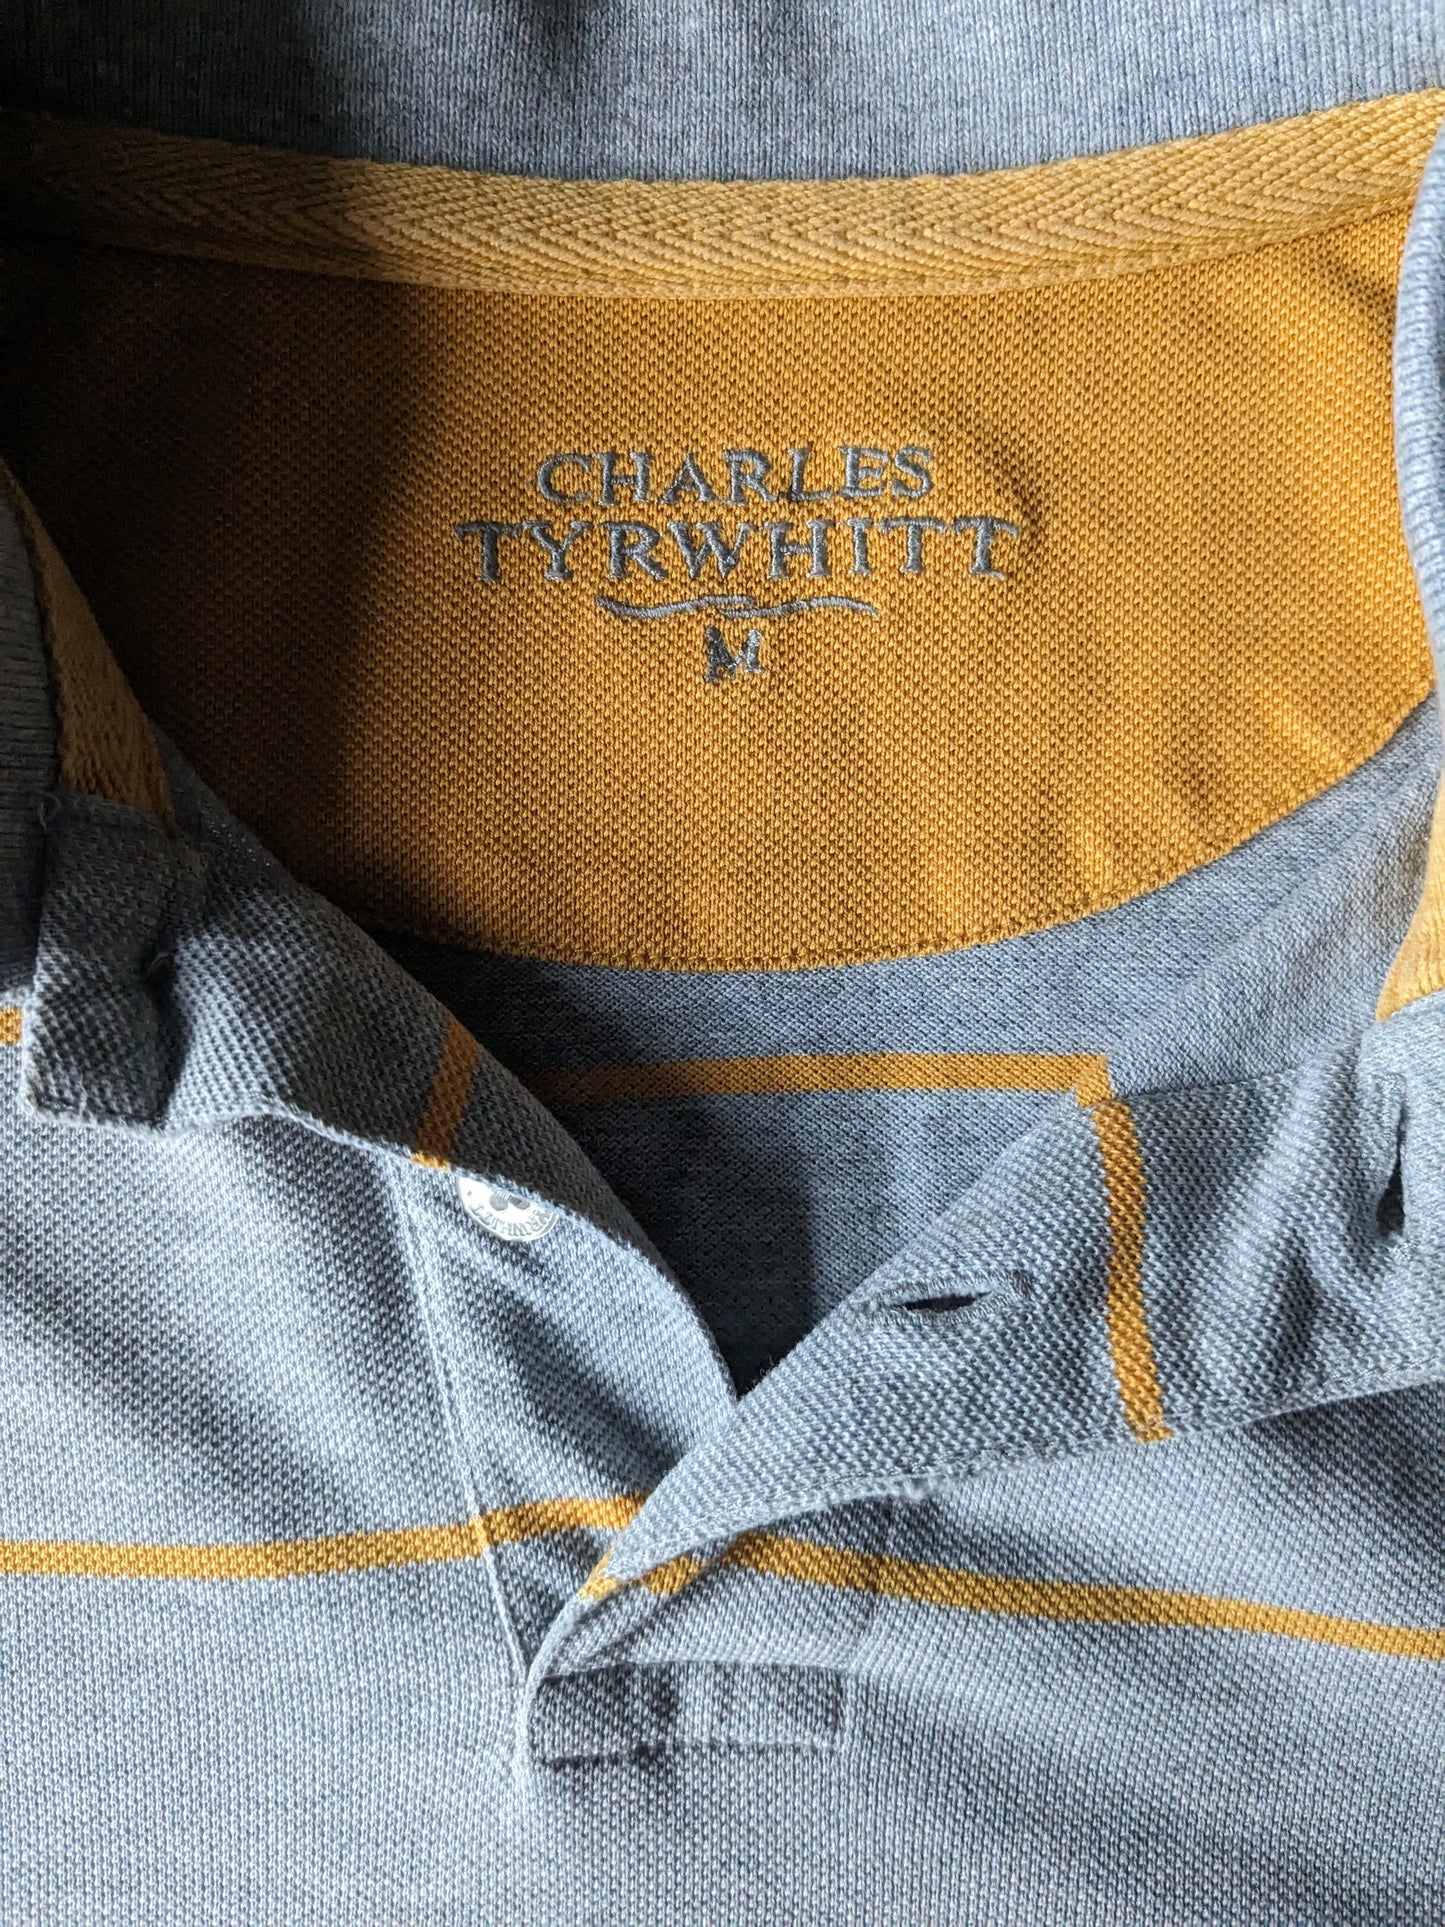 Charles Tyrwitt Polotrui. Gray yellow striped. Size M.